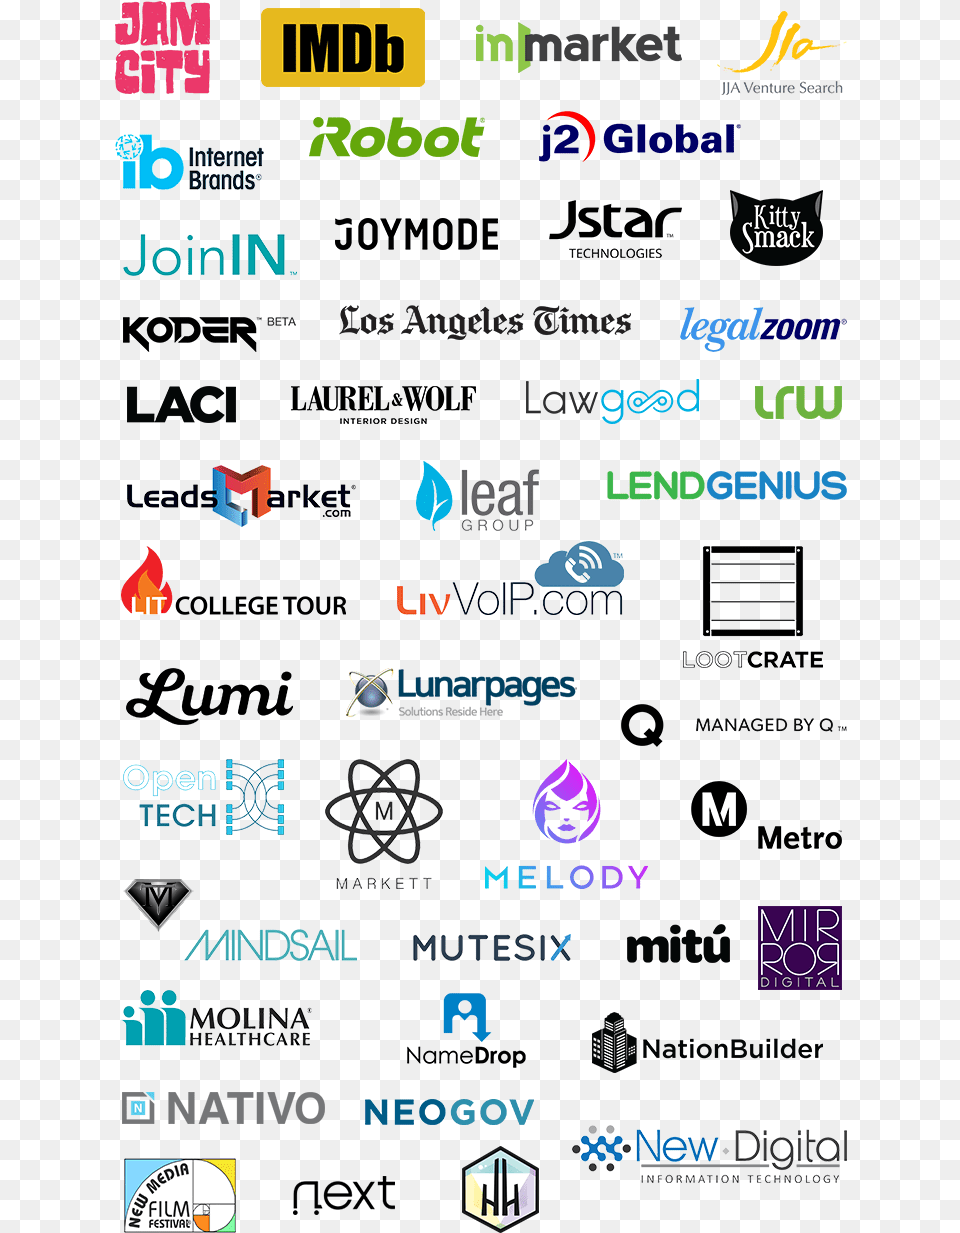 Techfair Logos Companies Companies In Los Angeles Ca Logo Free Transparent Png